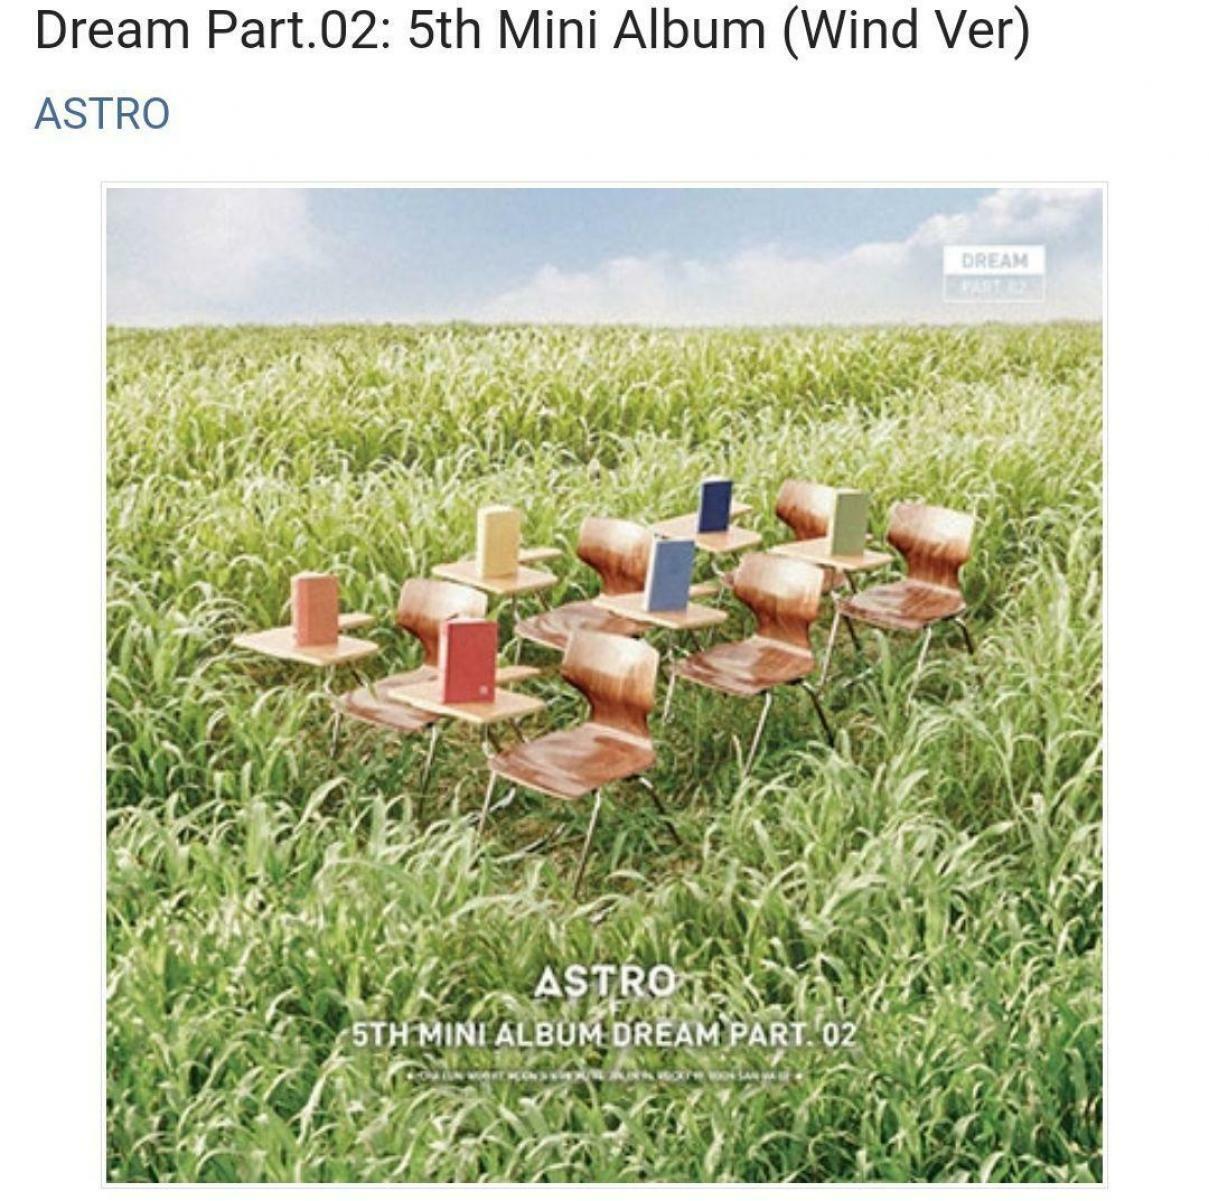 ASTRO DREAM PART 02 2 types set CD album wind ver wish ver K-POP Unopened  New